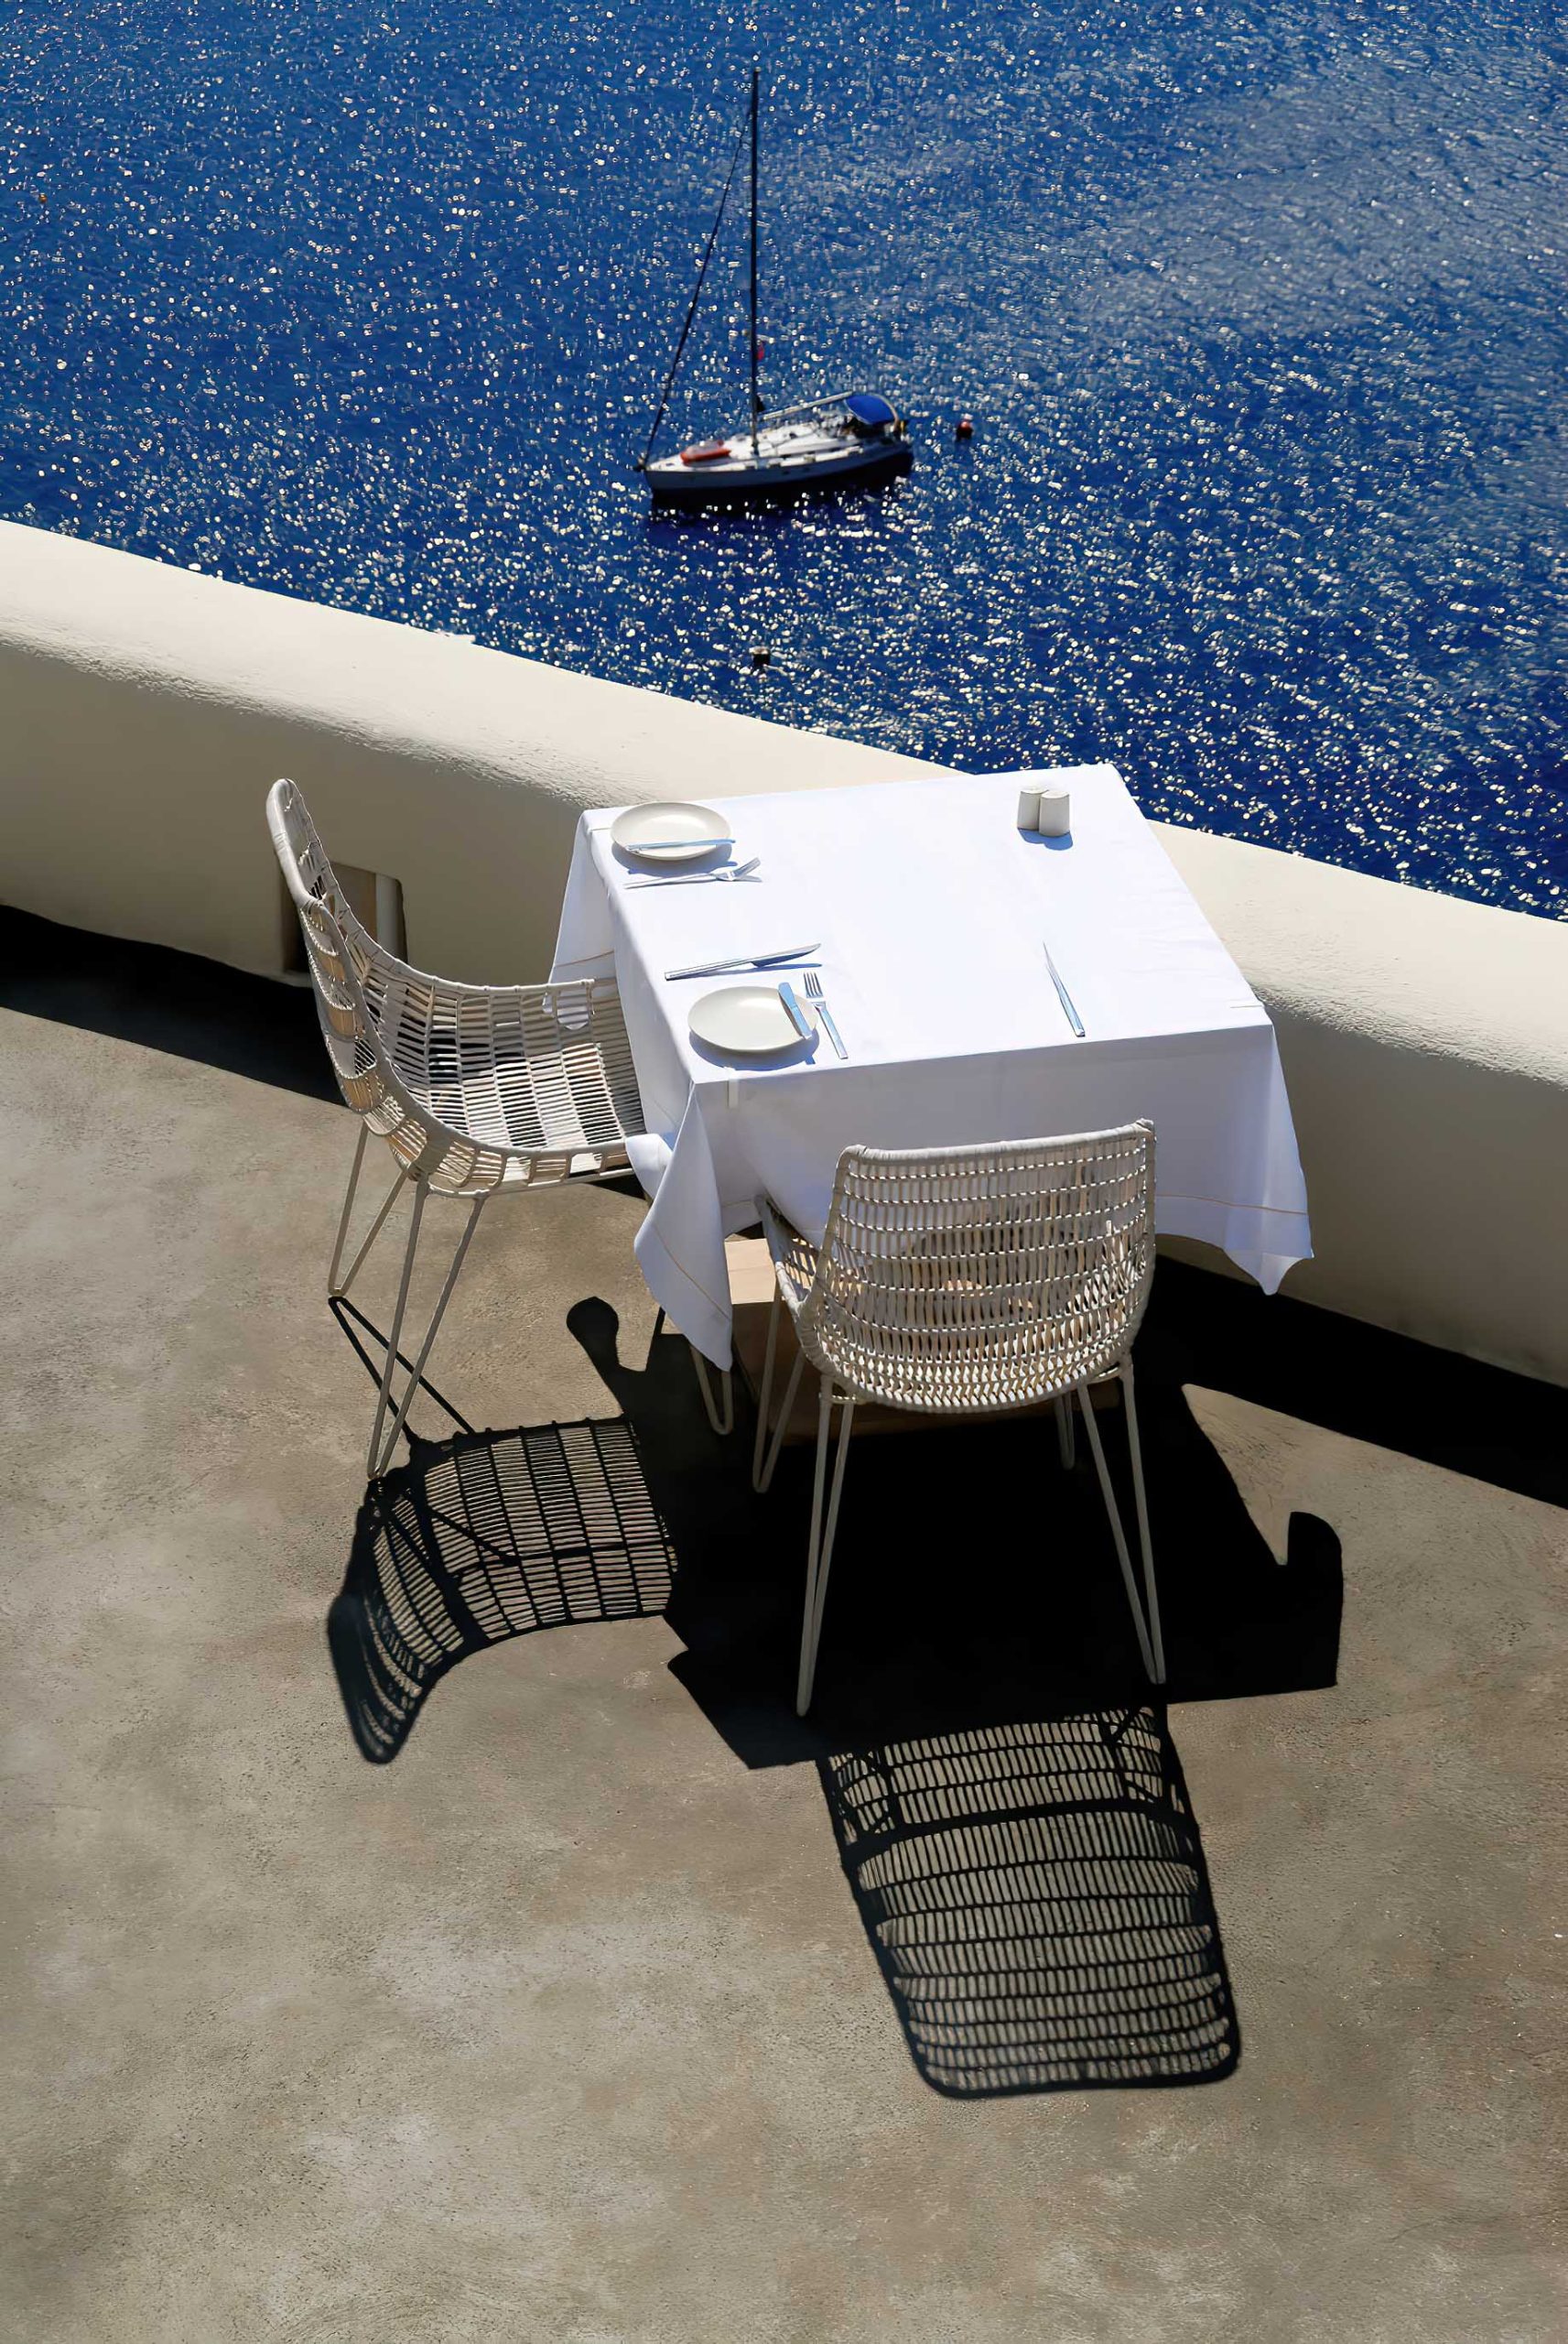 Mystique Hotel Santorini – Oia, Santorini Island, Greece – Ocean View Patio Dining